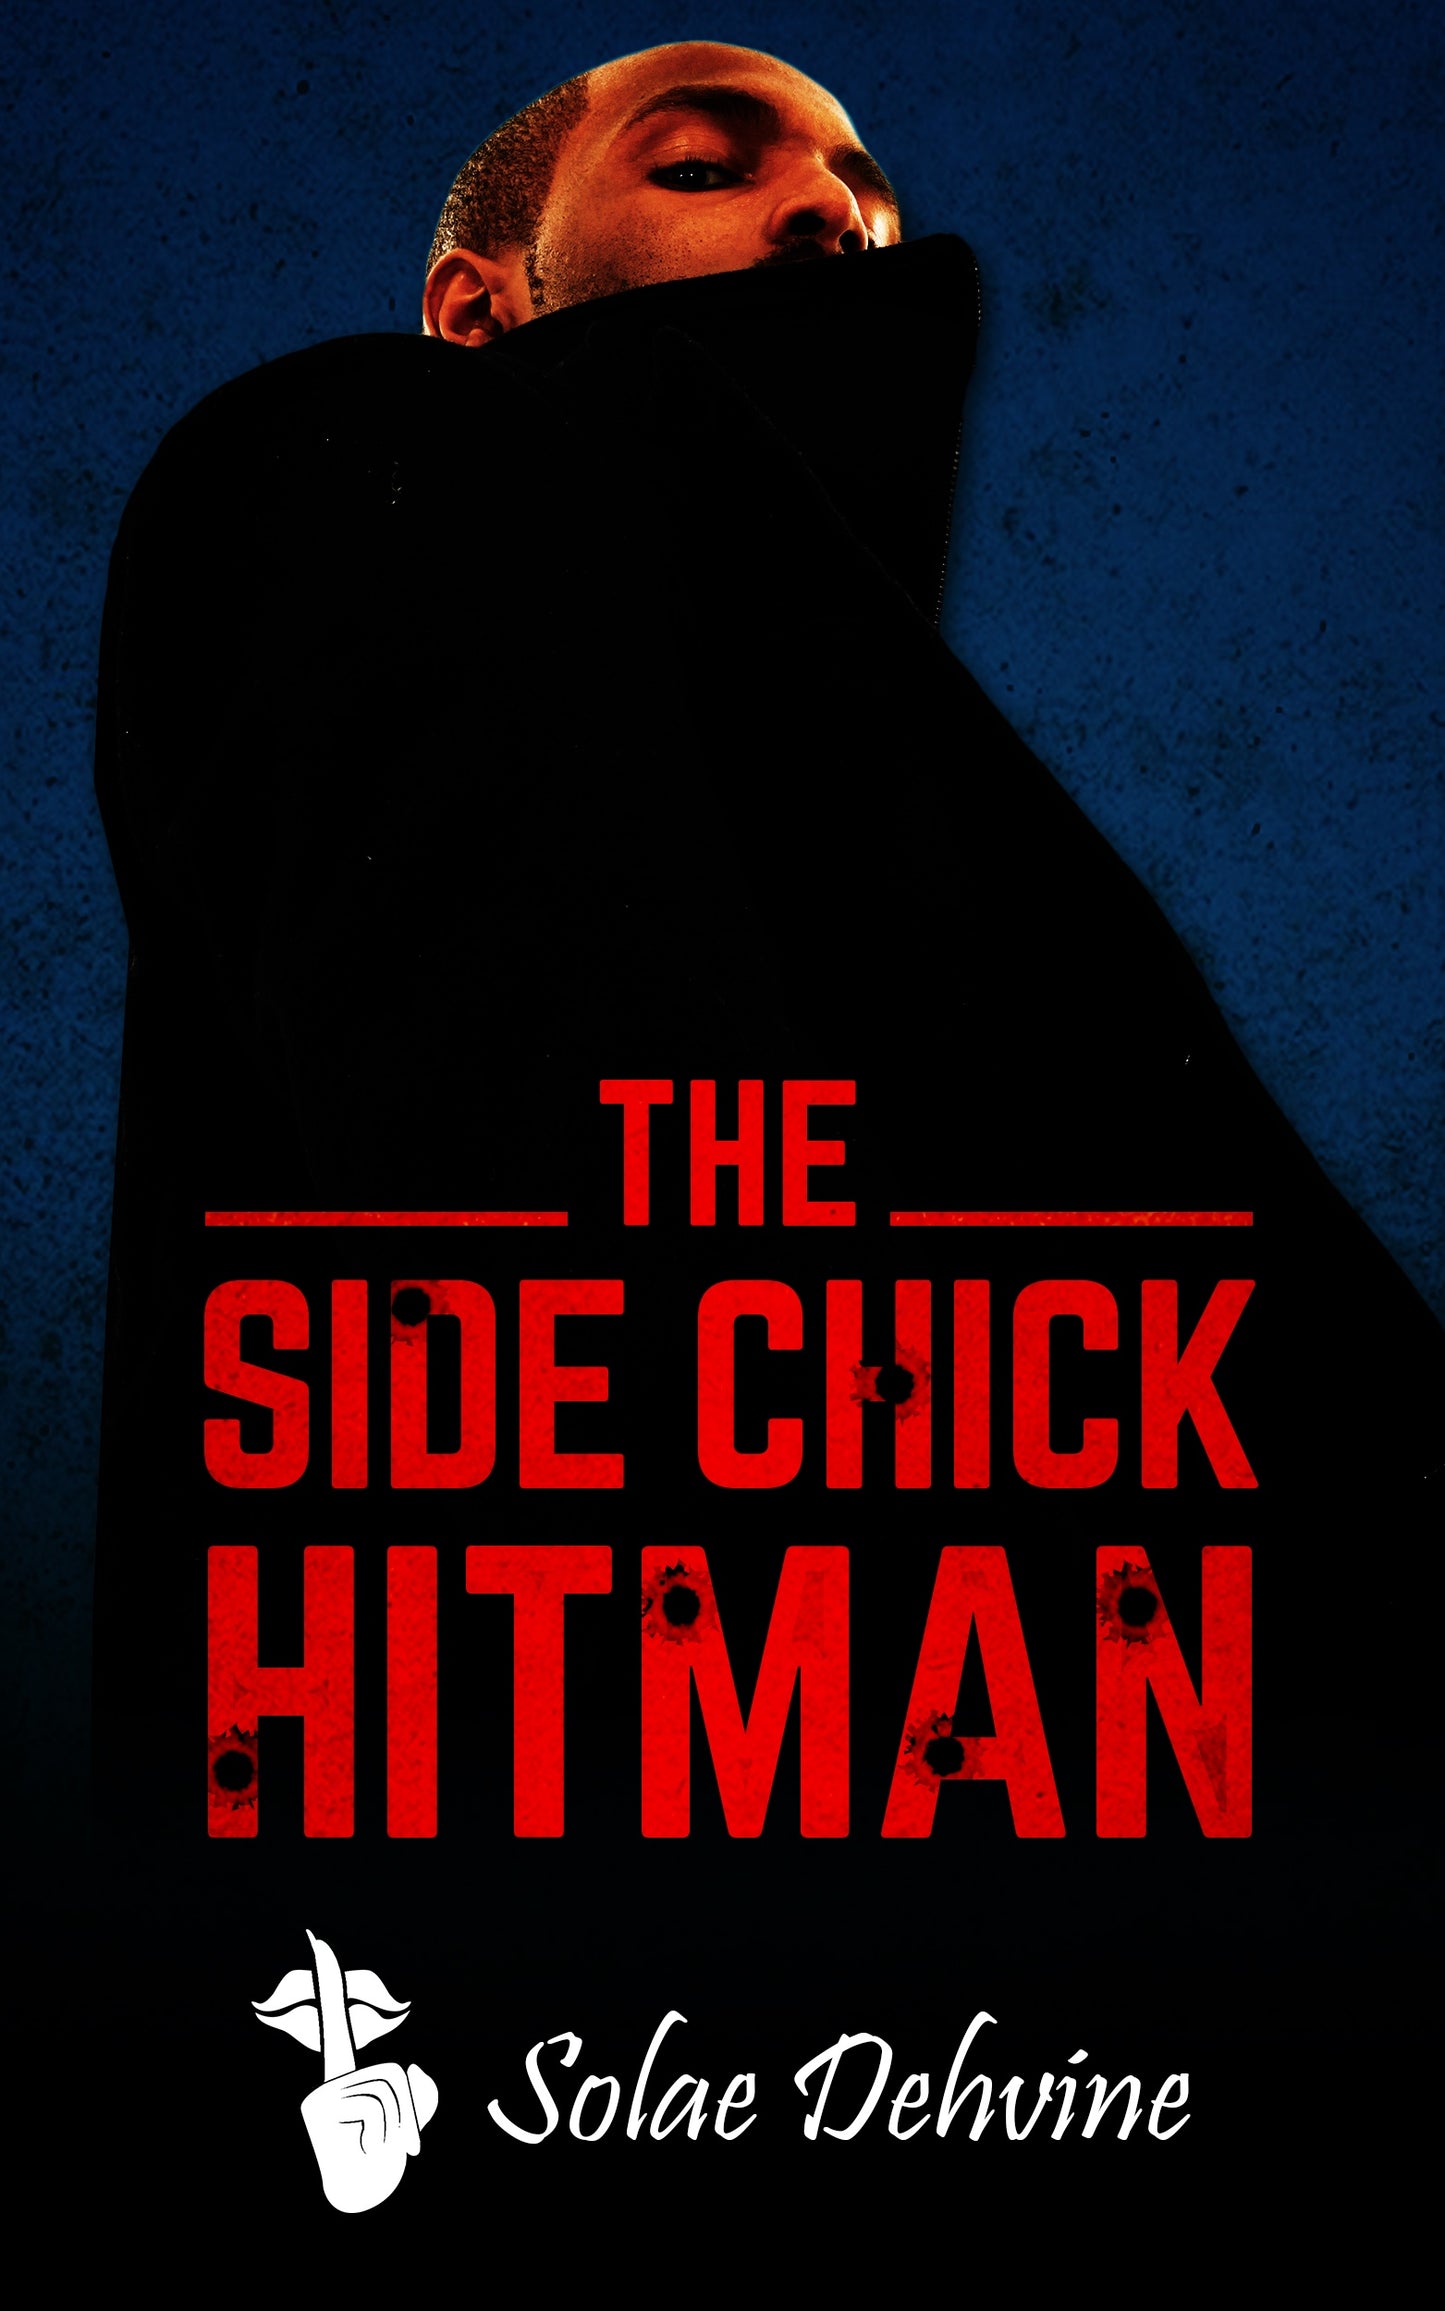 Side Chick Hitman